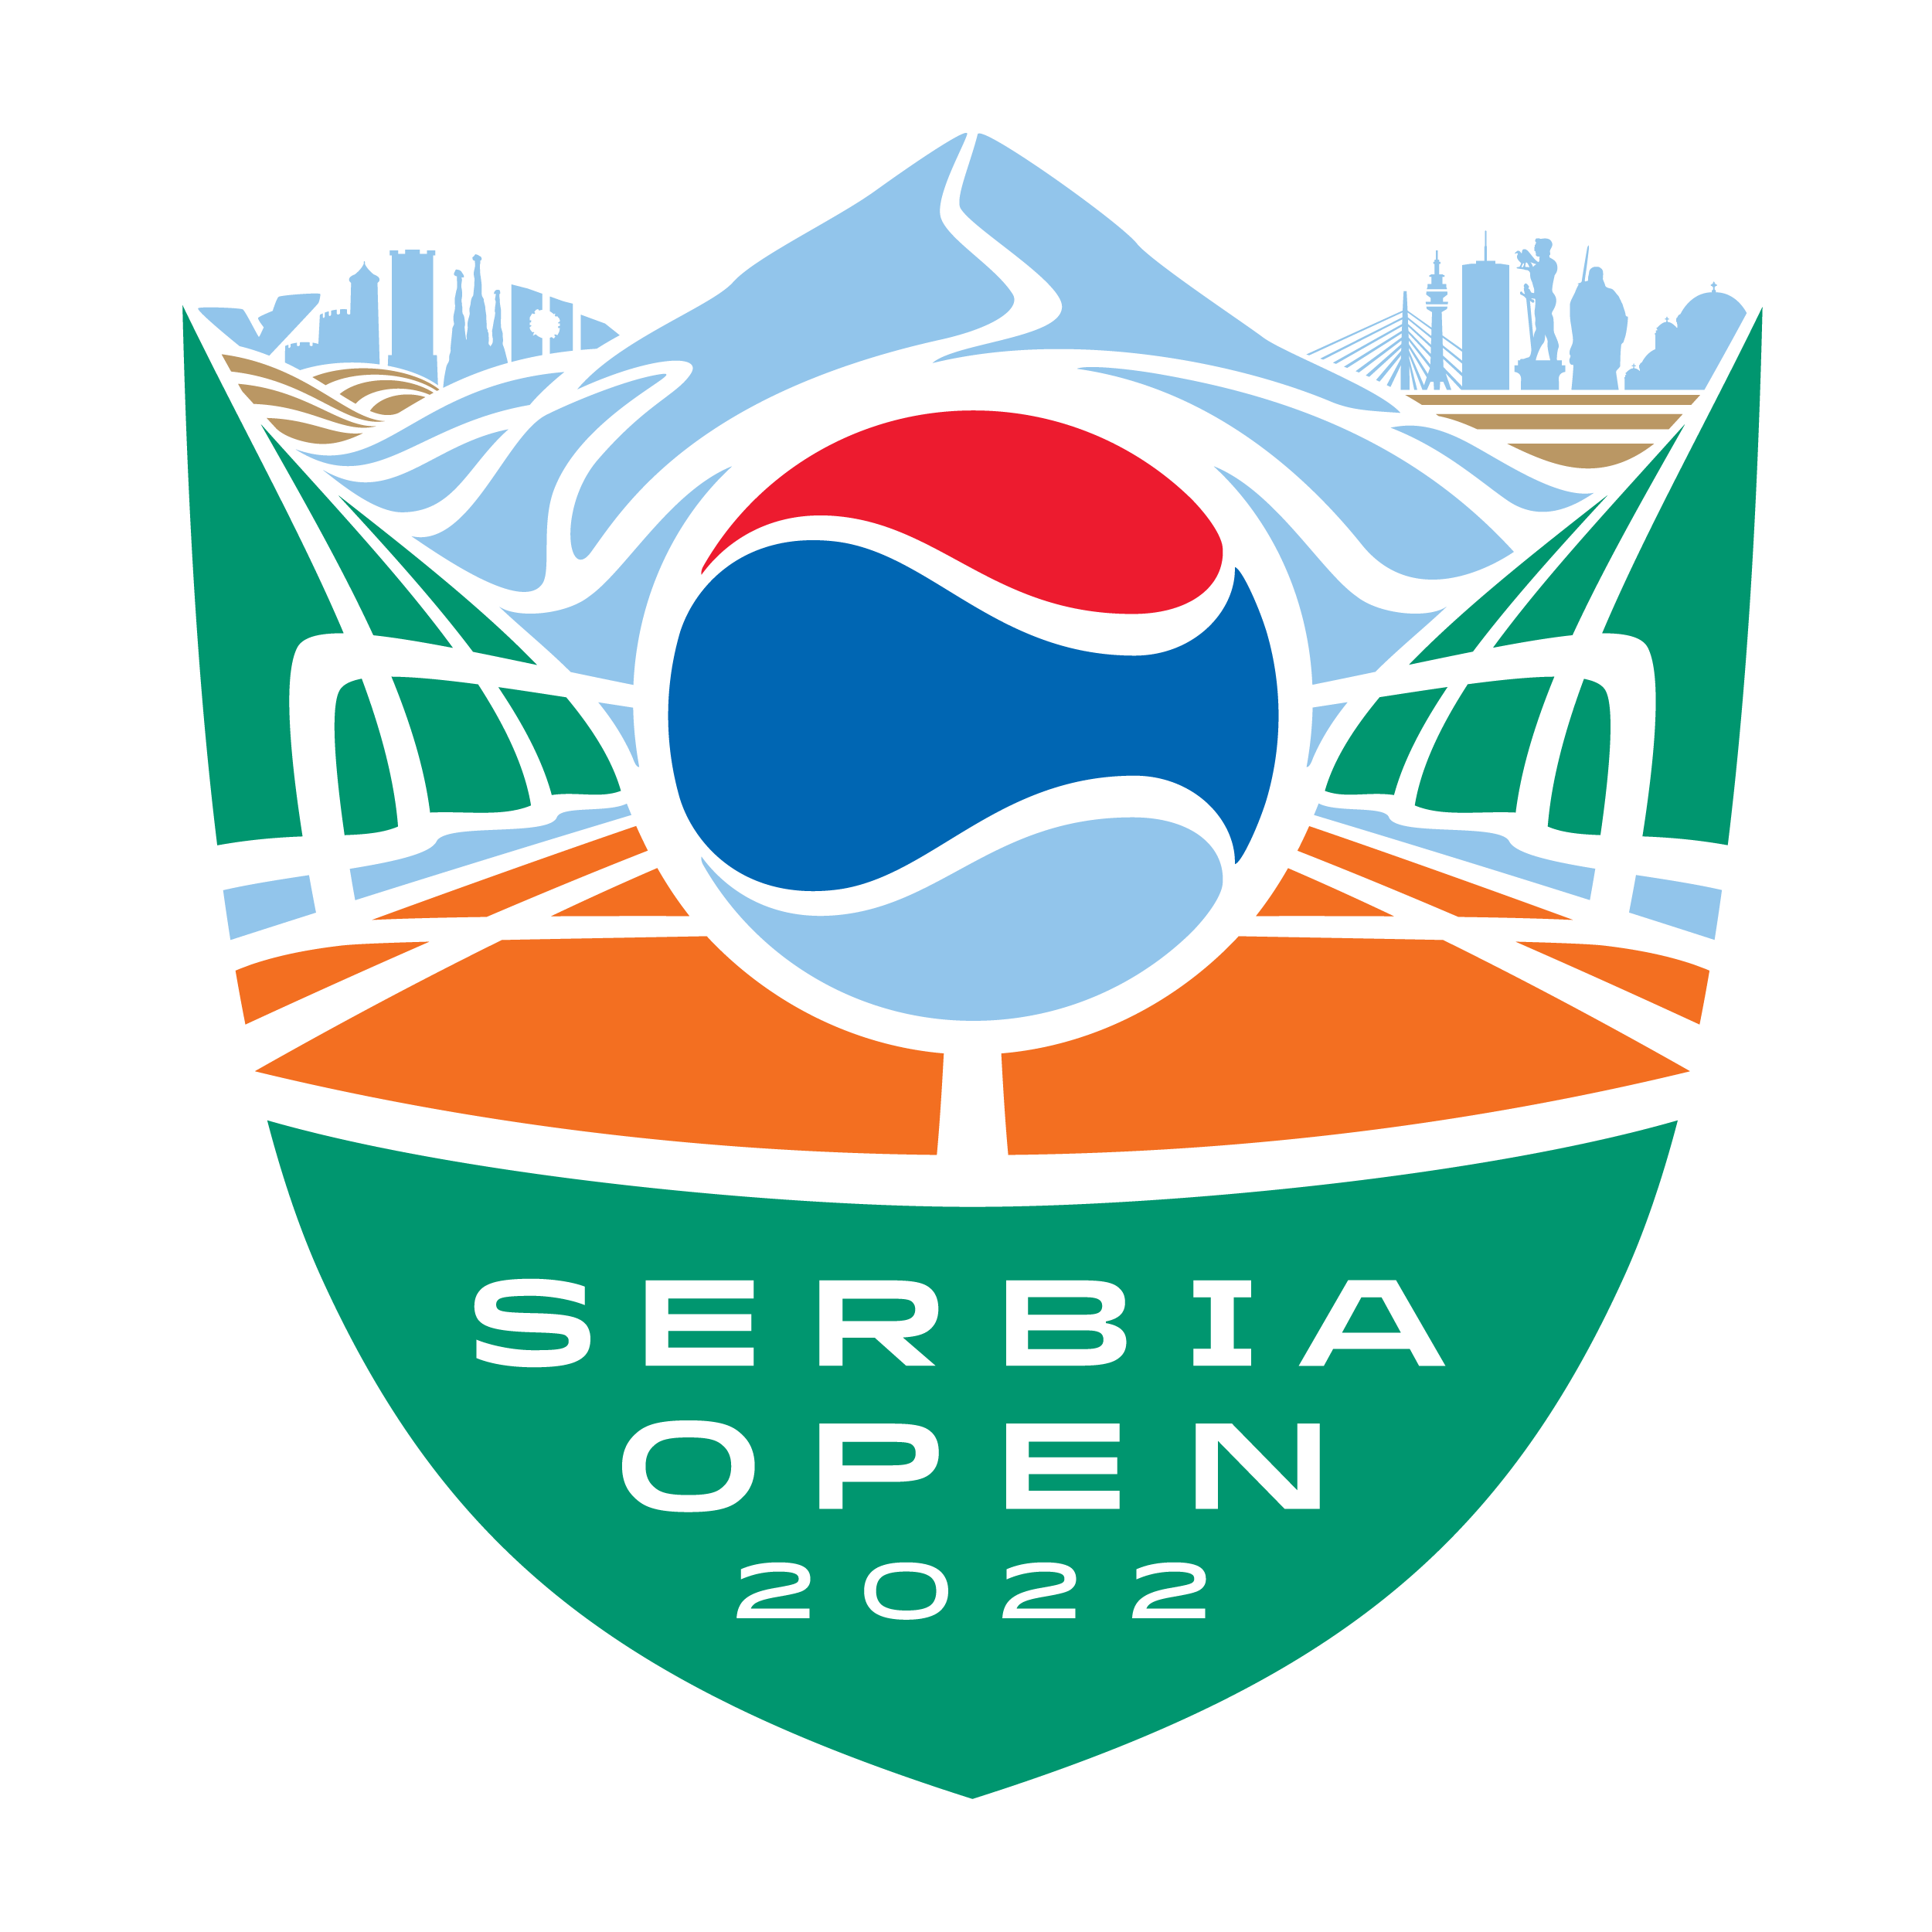 Serbia Open tickets